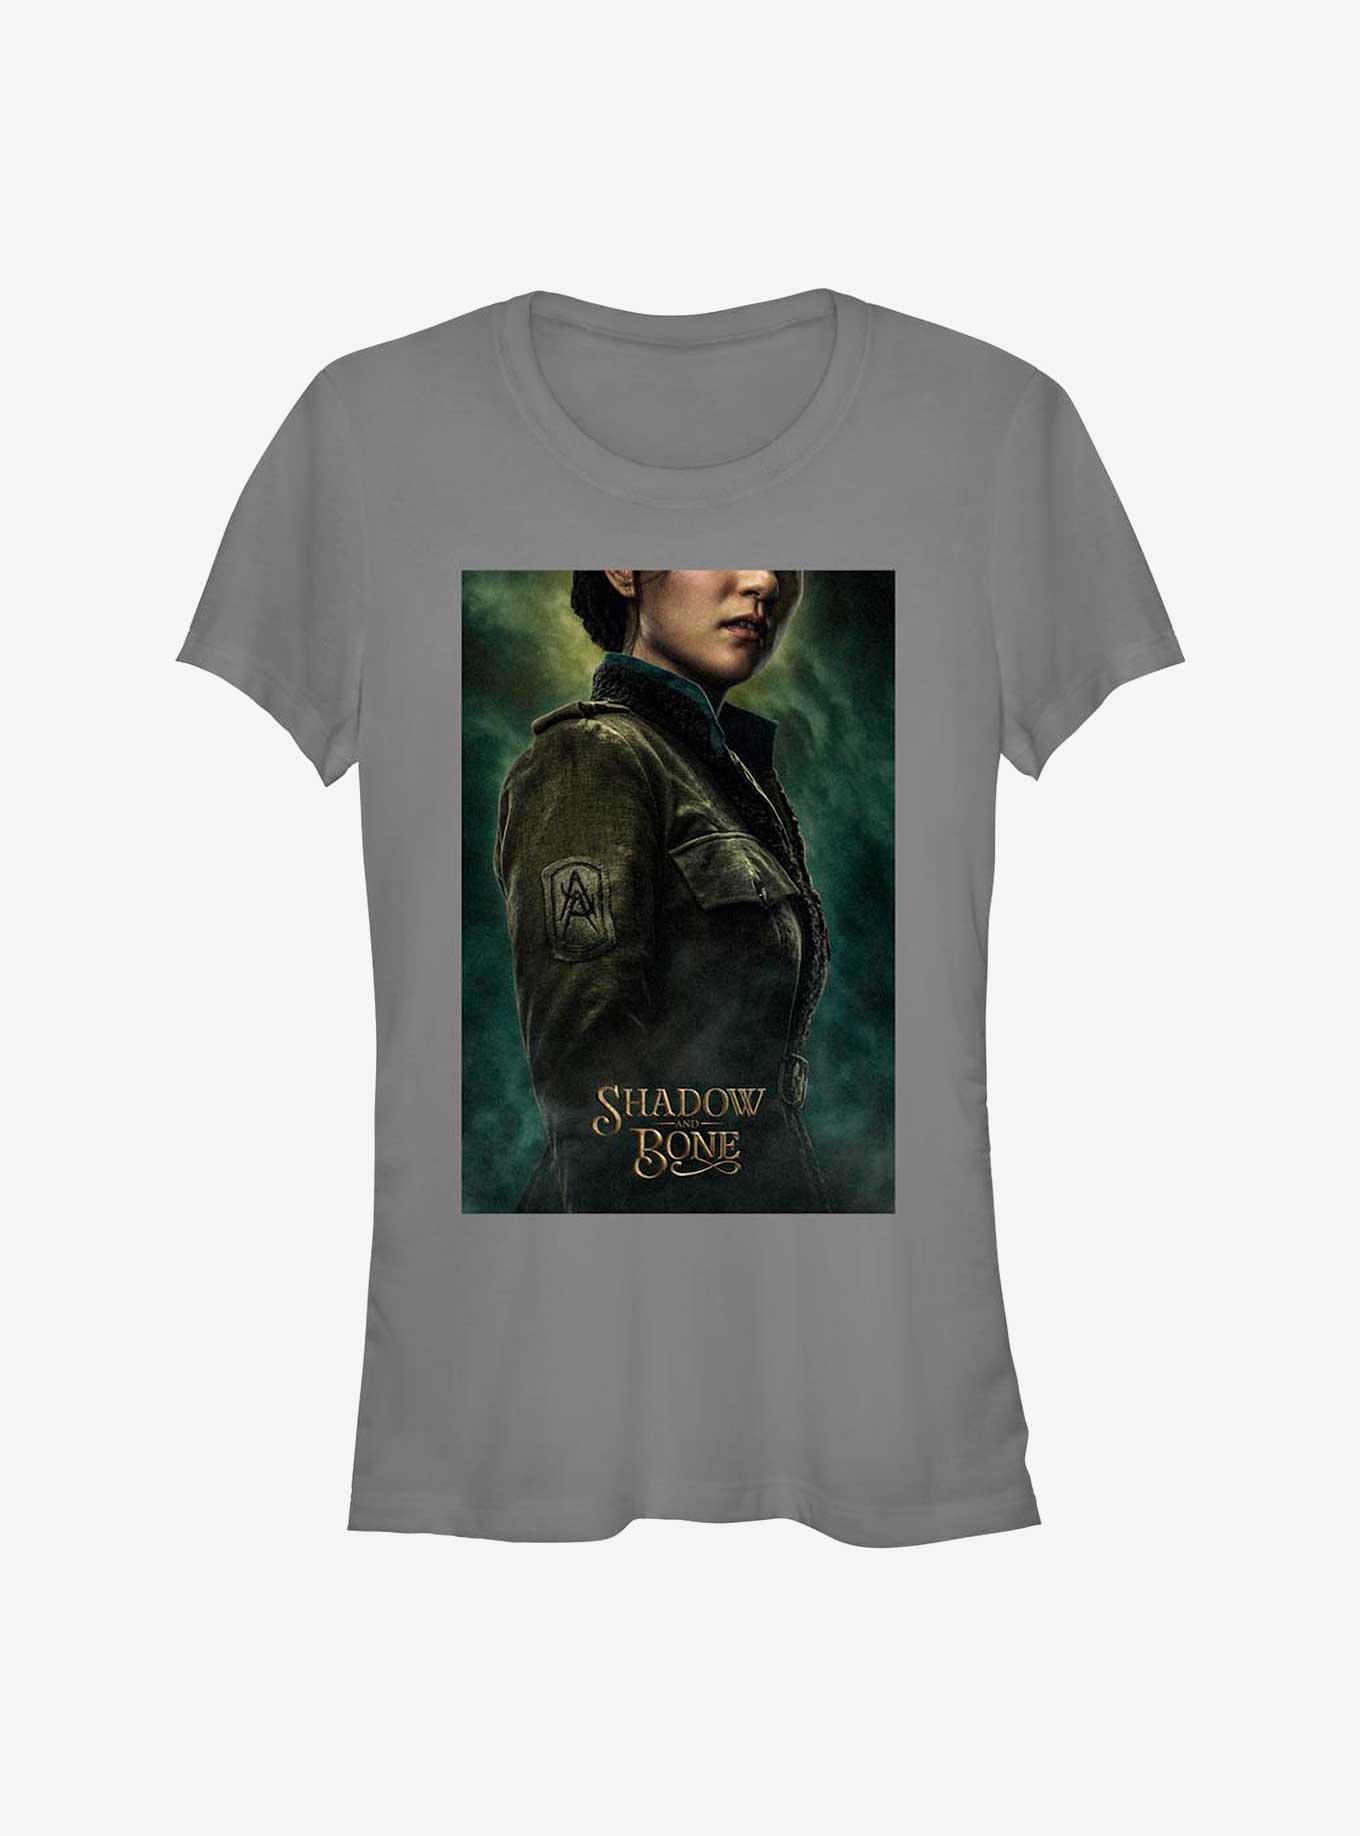 Shadow and Bone Alina Starkov Poster Girls T-Shirt